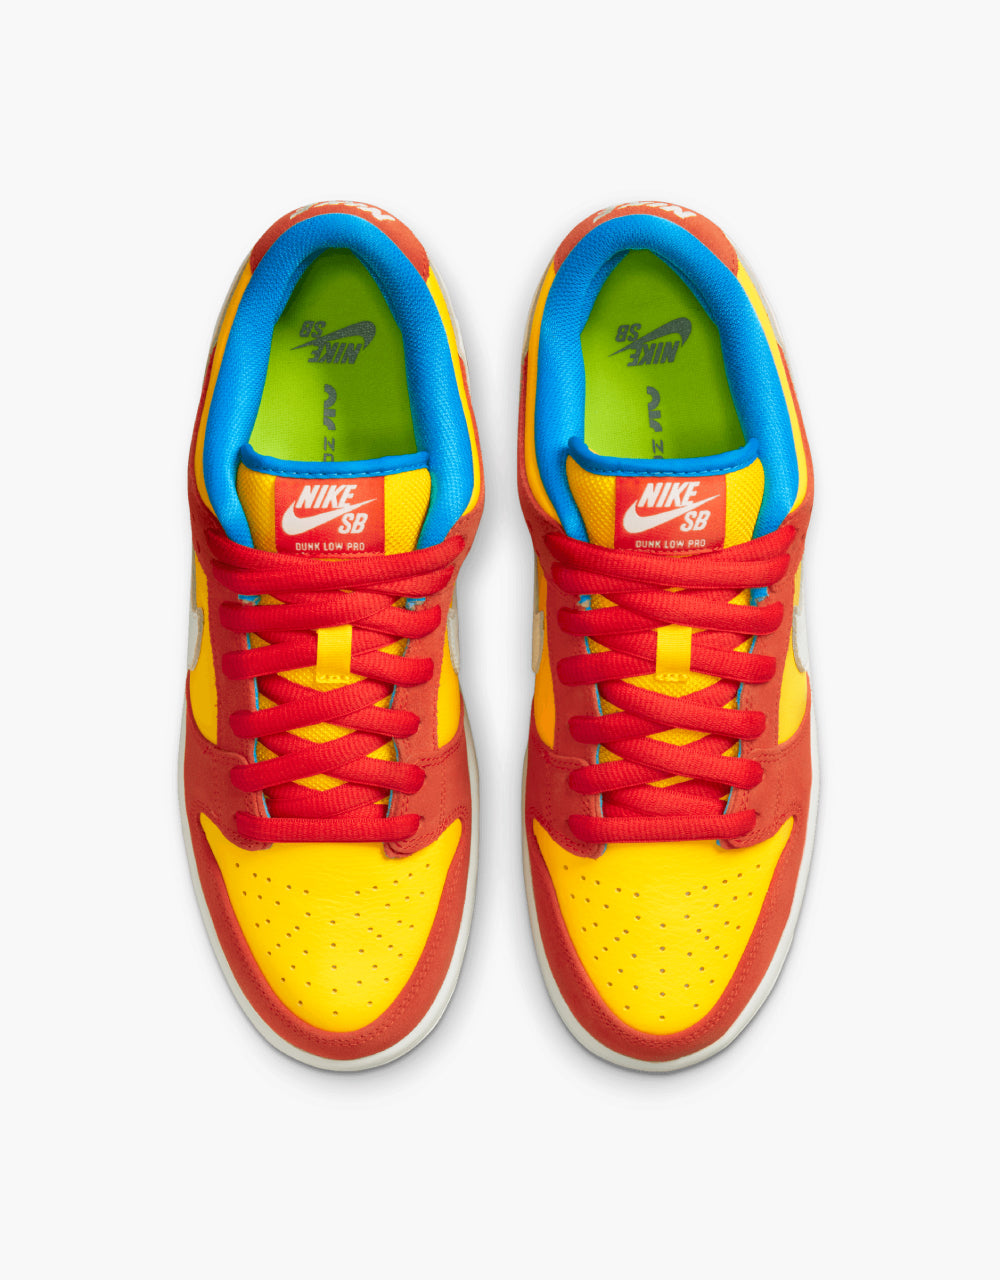 Nike SB 'Bart' Dunk Low Pro Skate Shoes - Habanero Red/White-Blue Hero